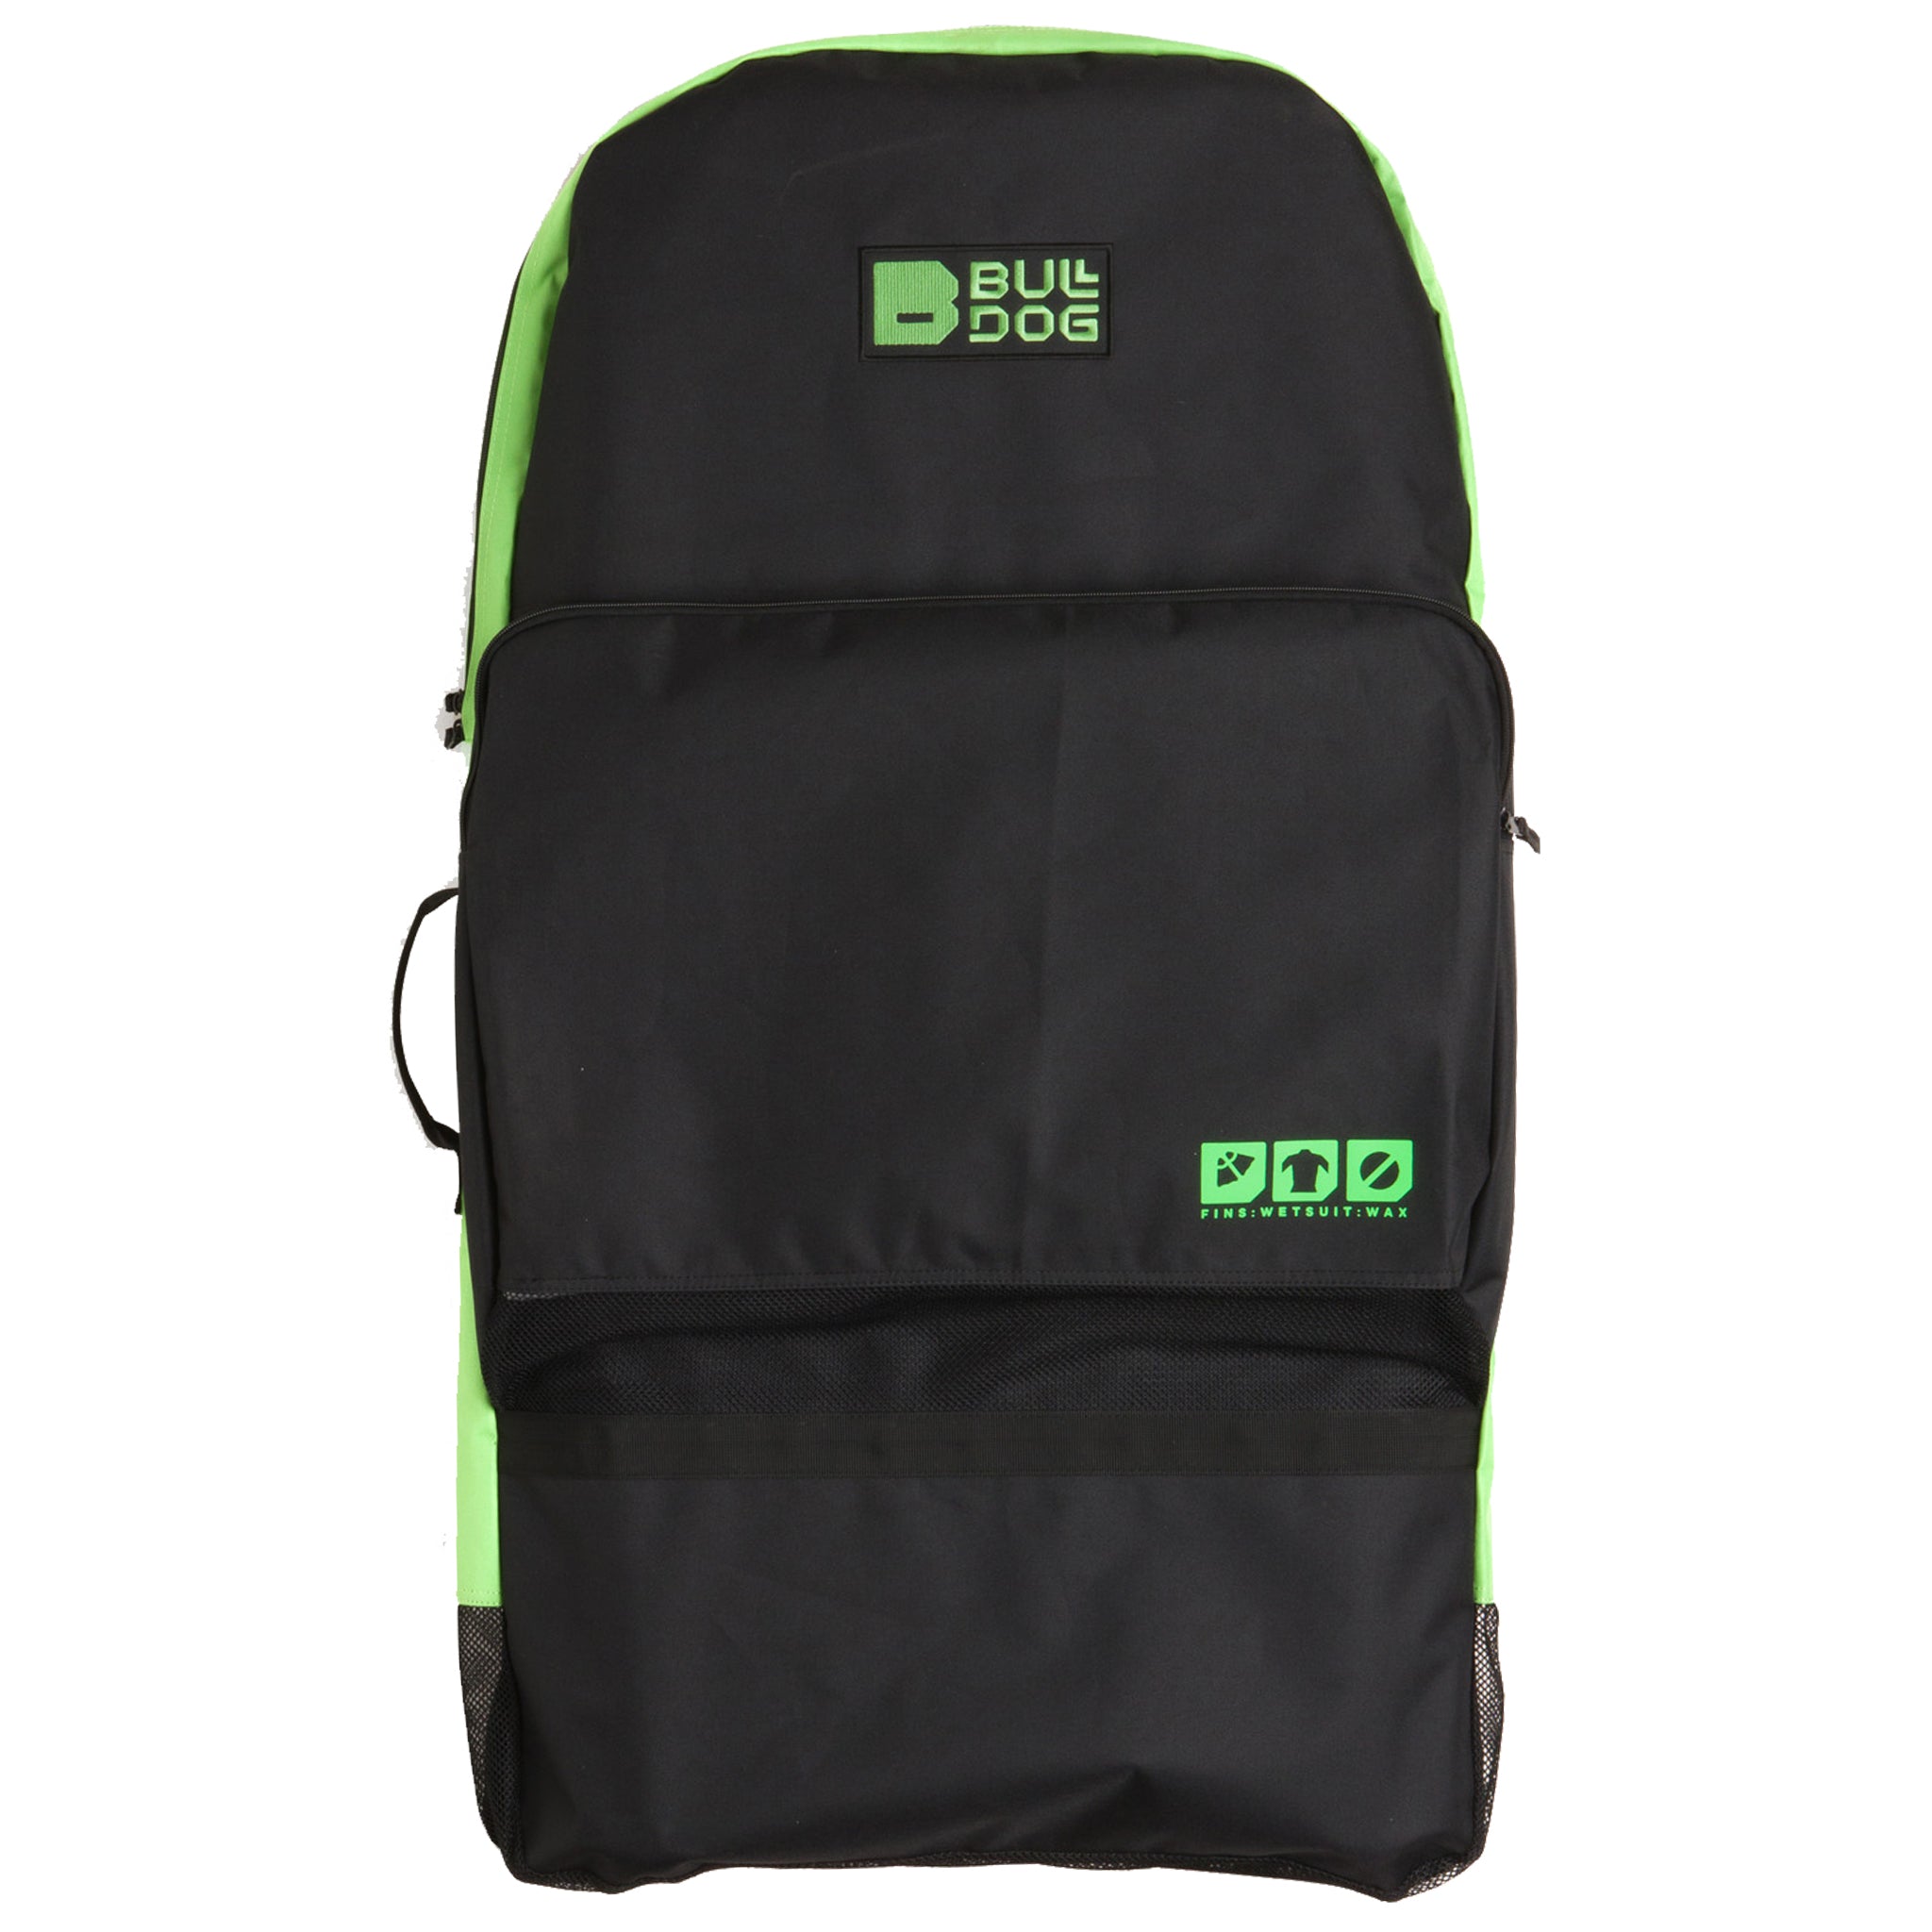 Bulldog Bodyboard Bag - Black/Neon Green